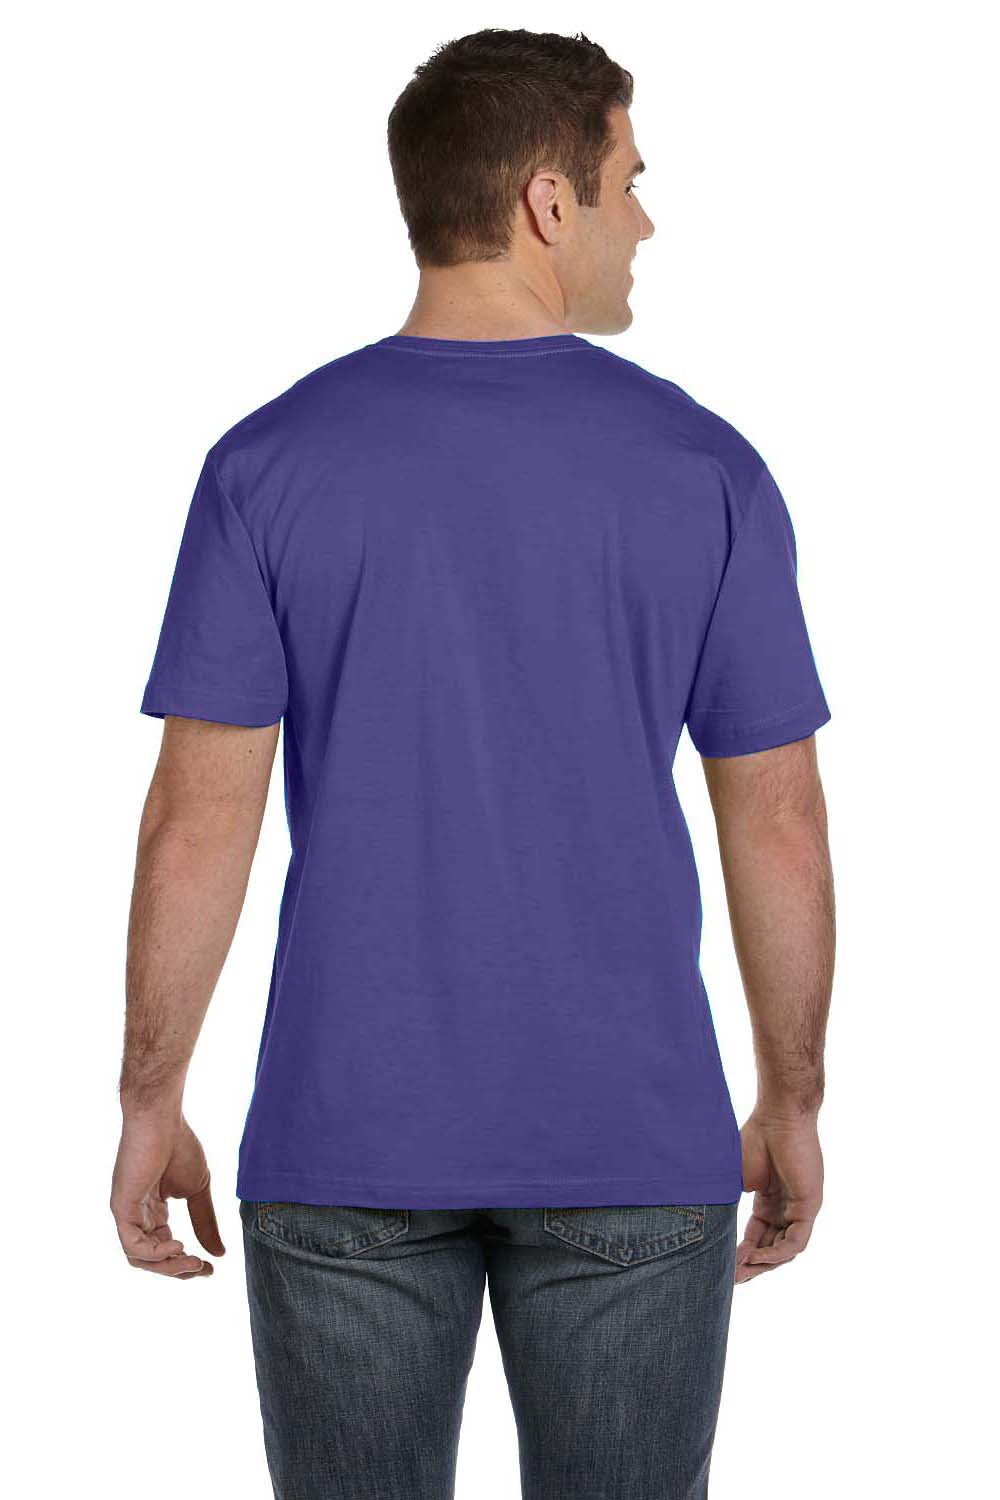 LAT 6901 Mens Fine Jersey Short Sleeve Crewneck T-Shirt Purple Back